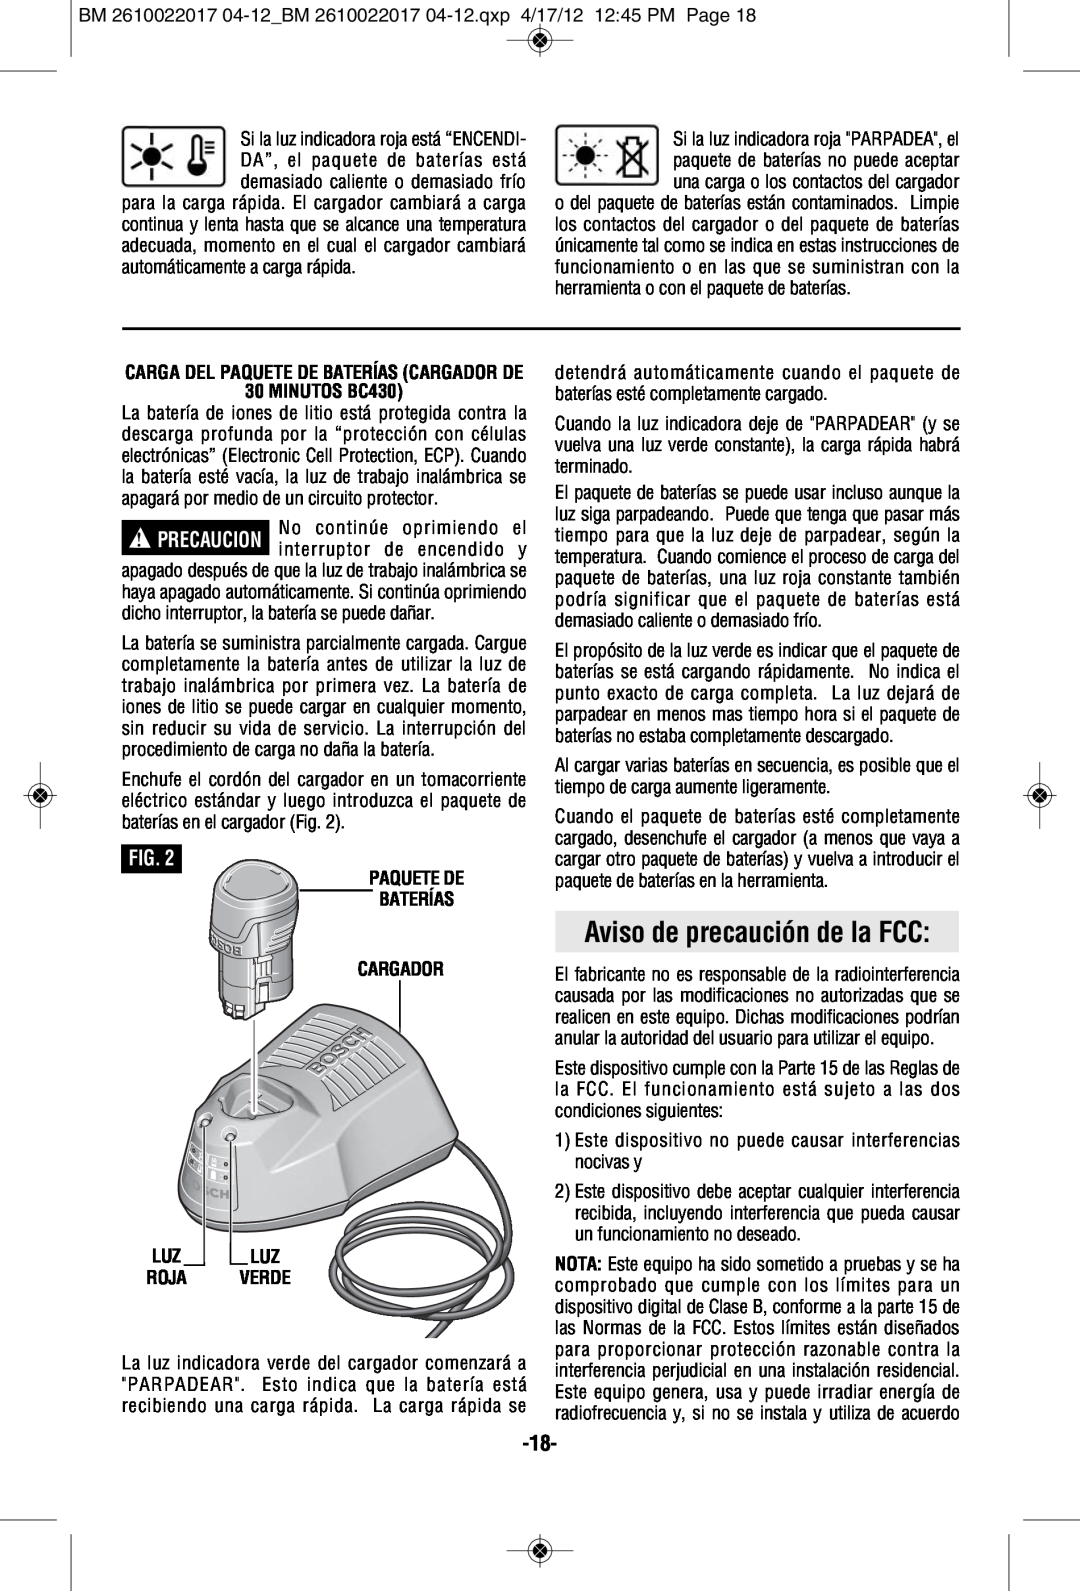 Bosch Power Tools FL11A Aviso de precaución de la FCC, MINUTOS BC430, Paquete De Baterías Cargador Luz Luz Roja Verde 